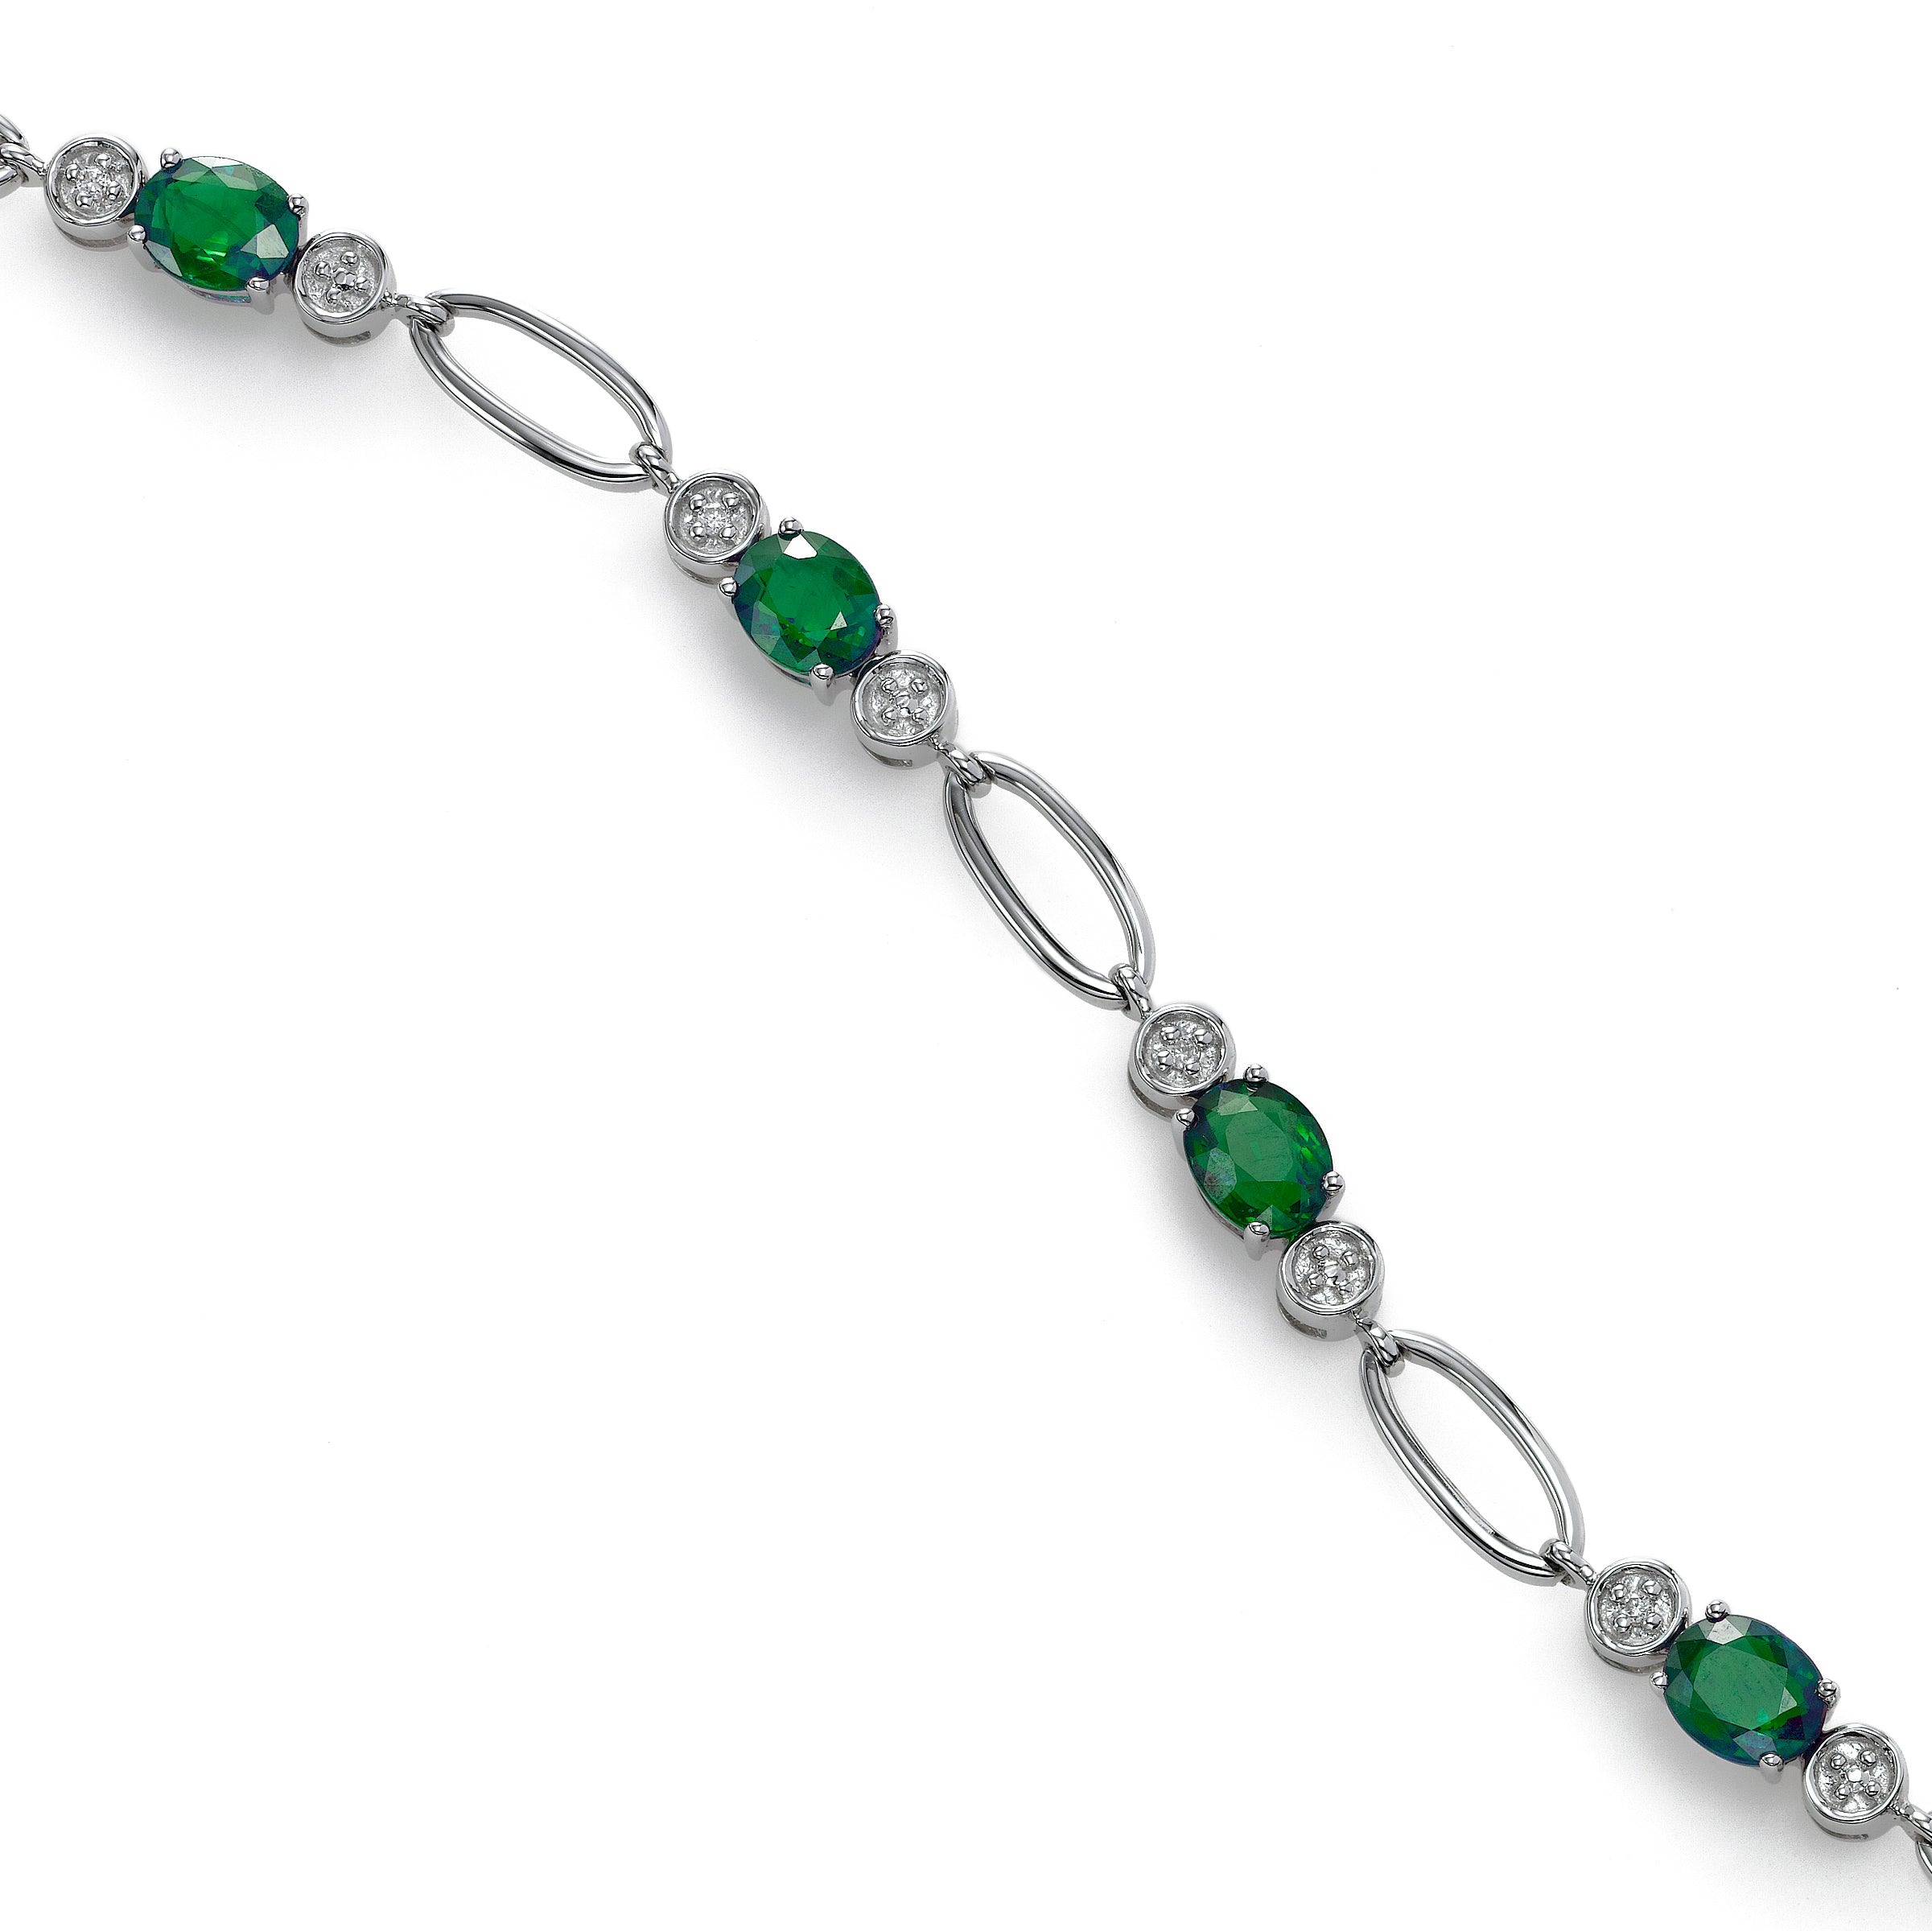 Clear Crystal Bracelets, April Birthstone Bracelets, Handmade Silver Clear Crystal Jewelry Bracelets 7.25 / White / Diamond